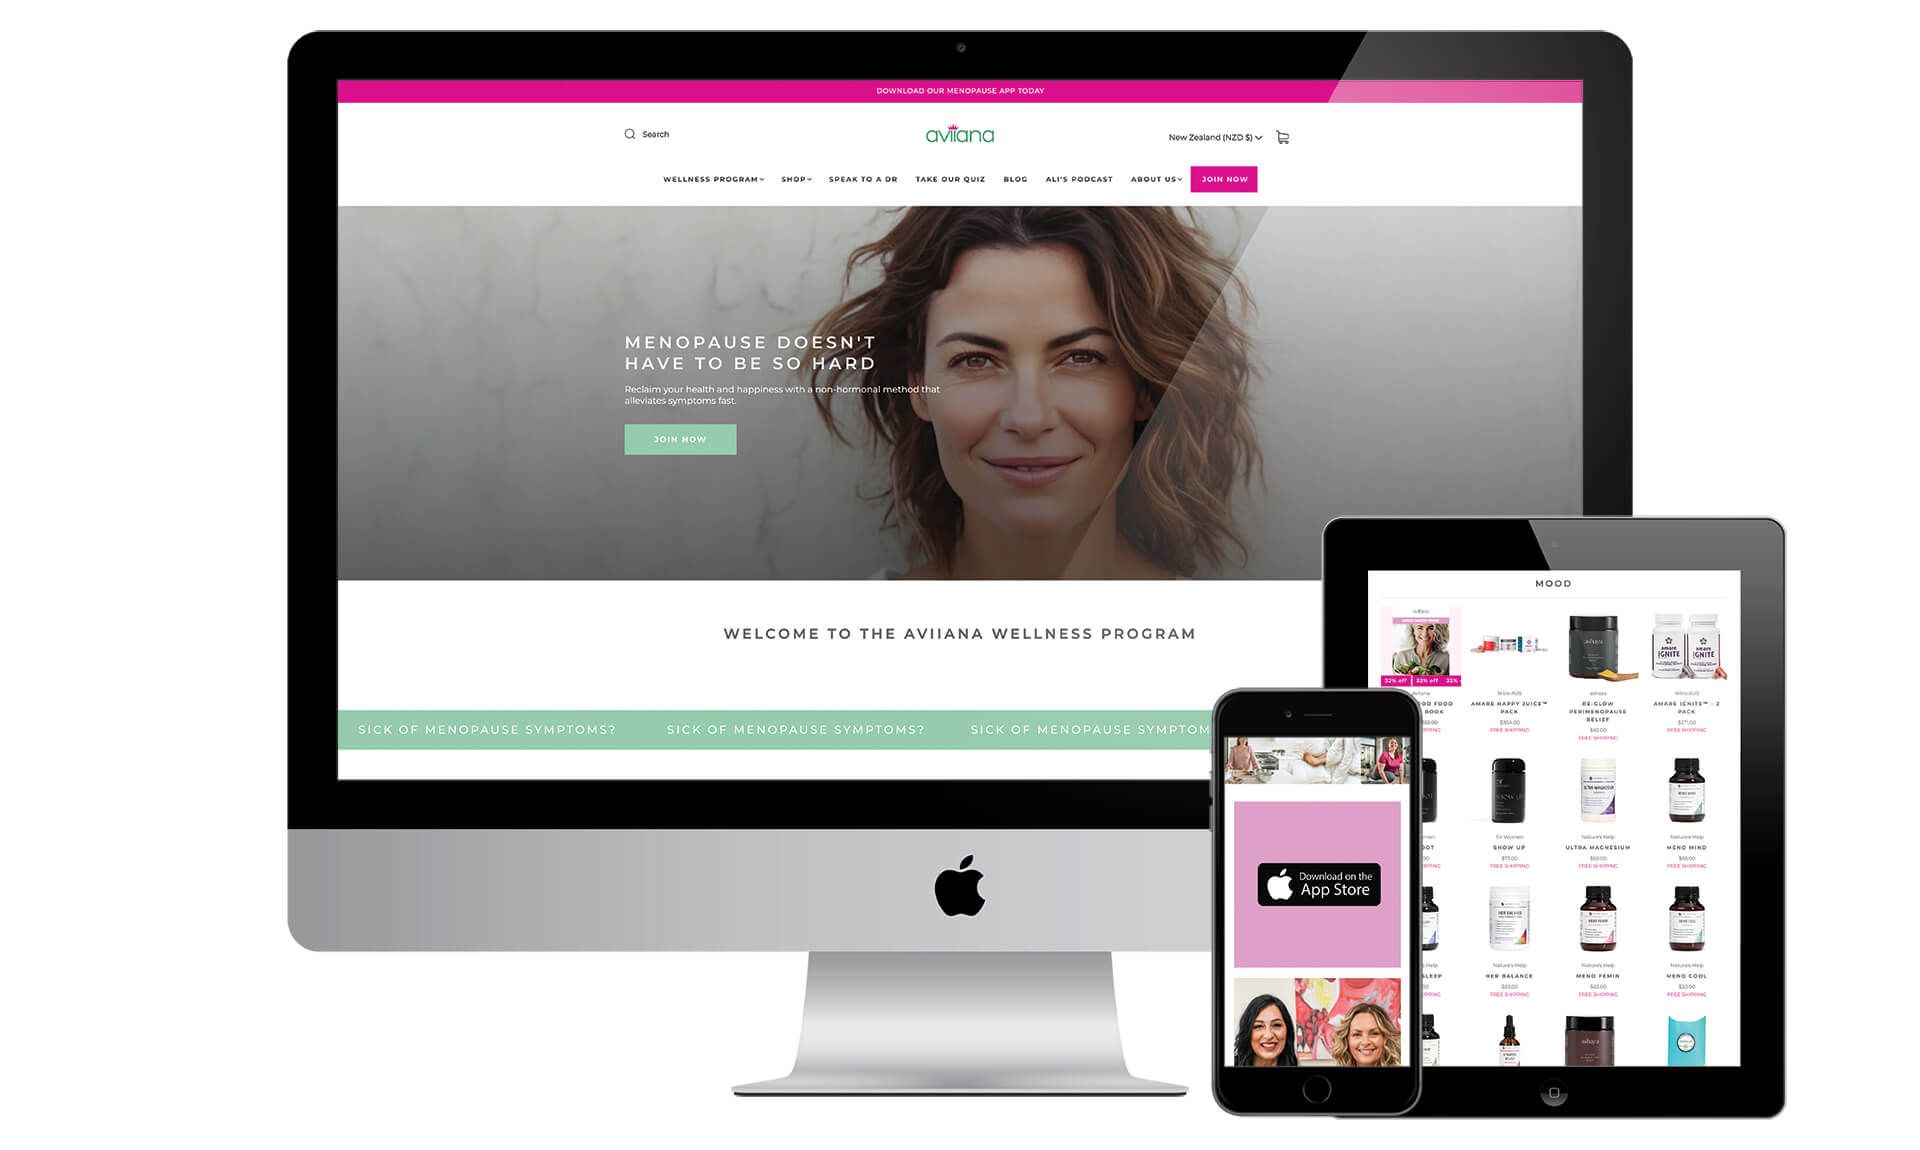 Aviiana website designed by Vanilla Hayes creative graphic design  studio in Blenheim, Marlborough, New Zealand